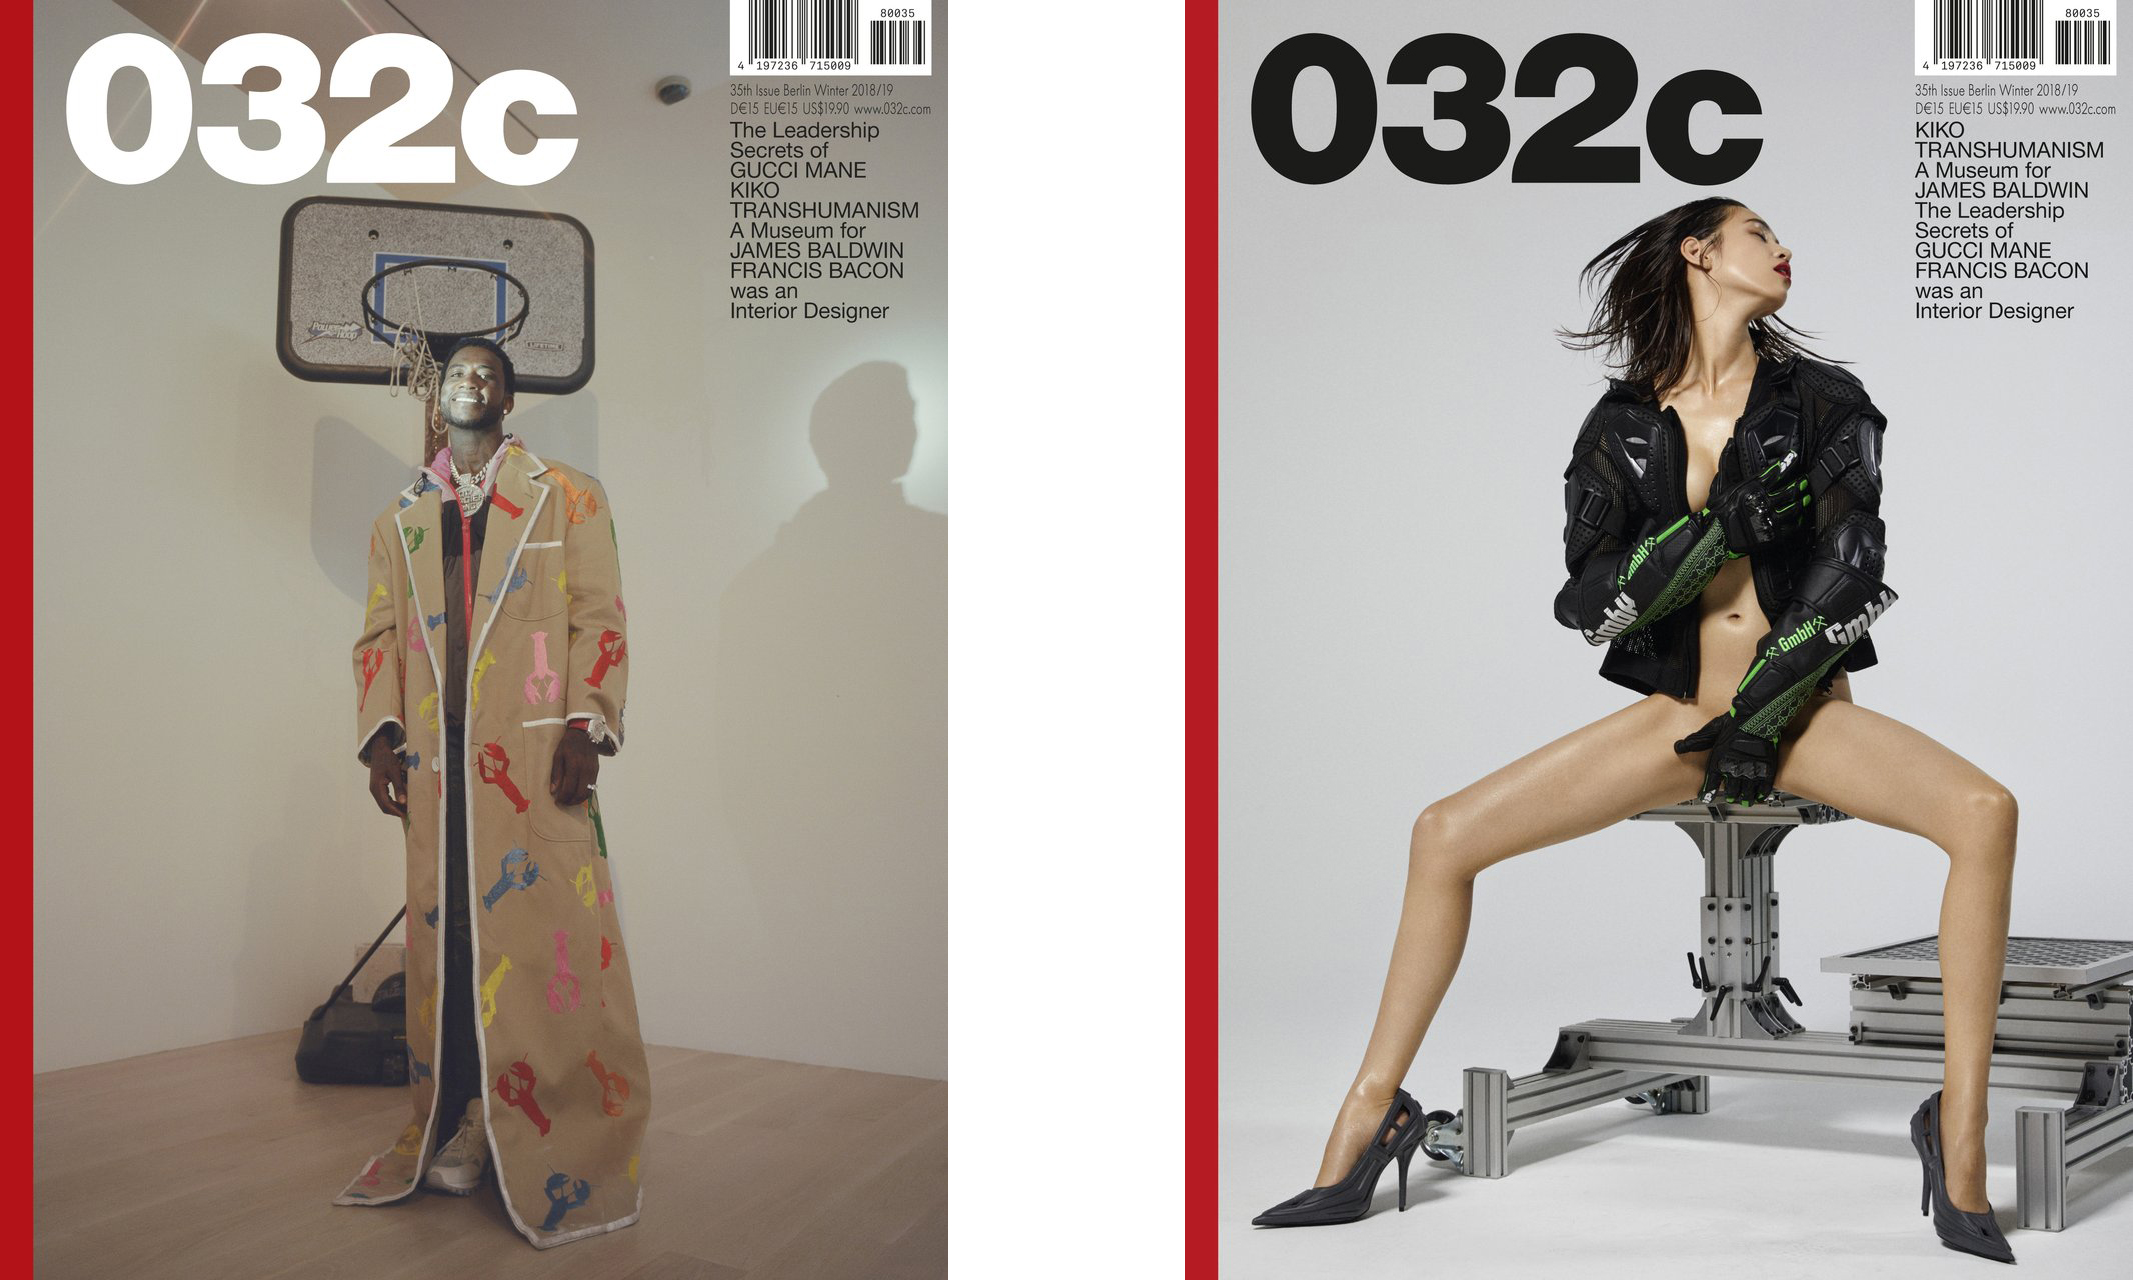 Gucci Mane、水原希子登上《032c》2018/2019 冬季刊封面